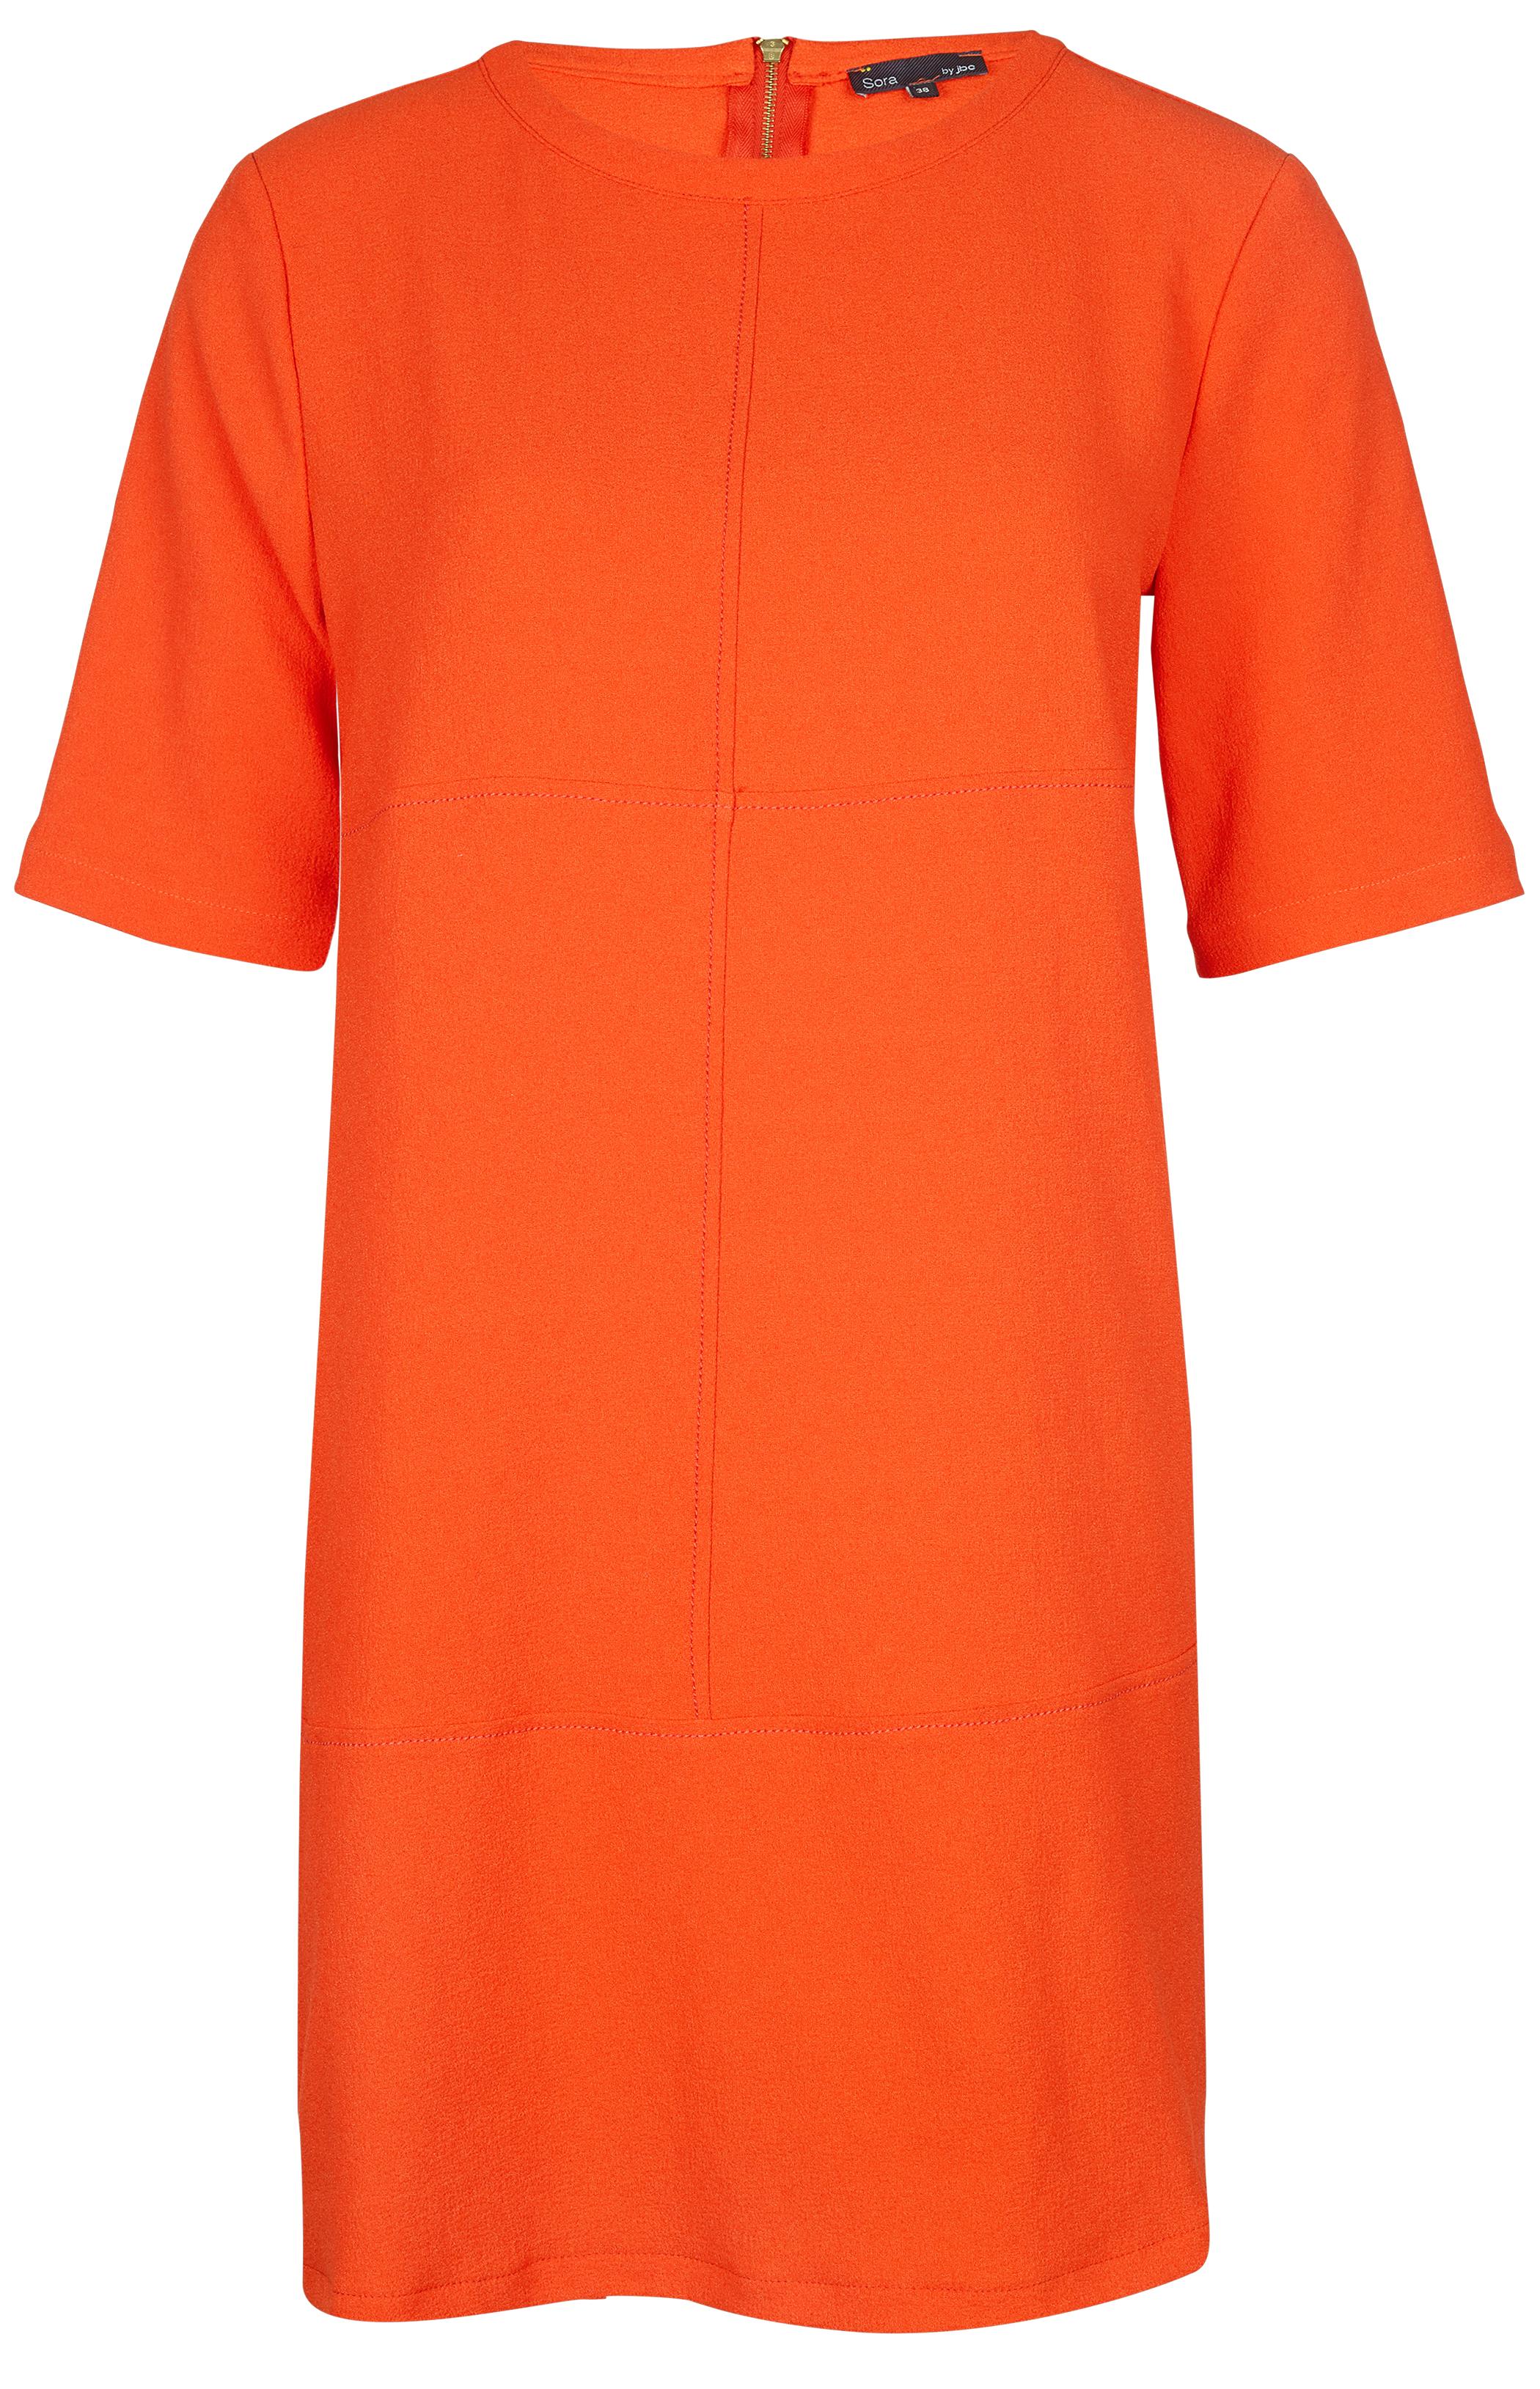 Robe orange - JBC - 49,90 €